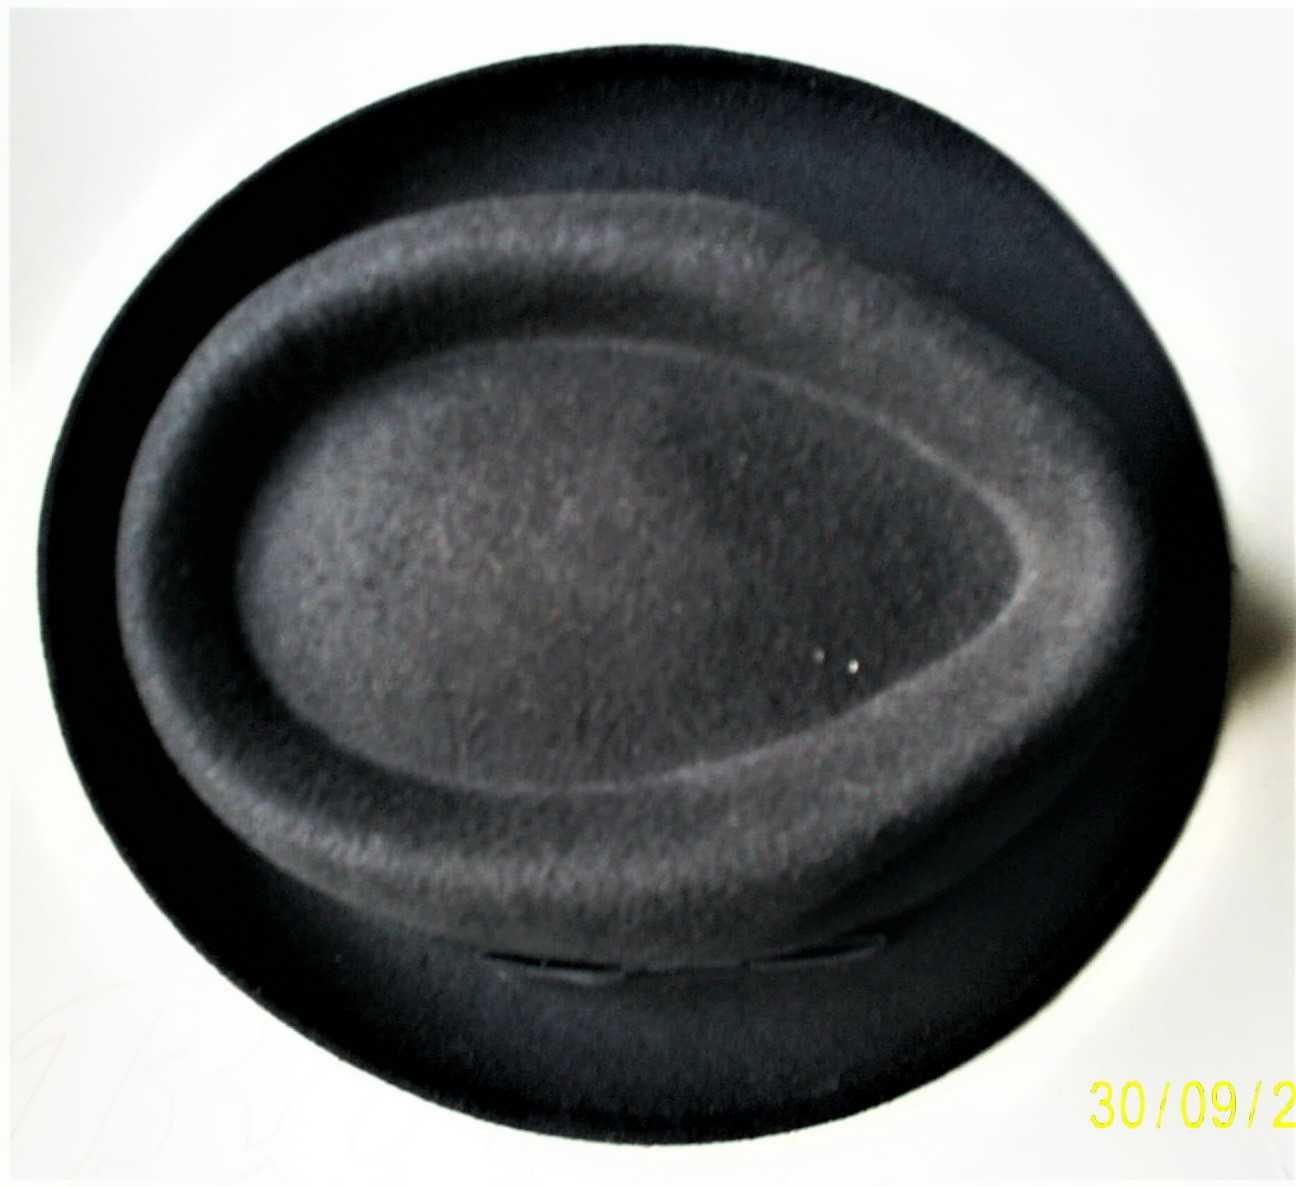 Pălării “retro” din fetru MOV sau NEGRU_brand BATA_Italia_m58